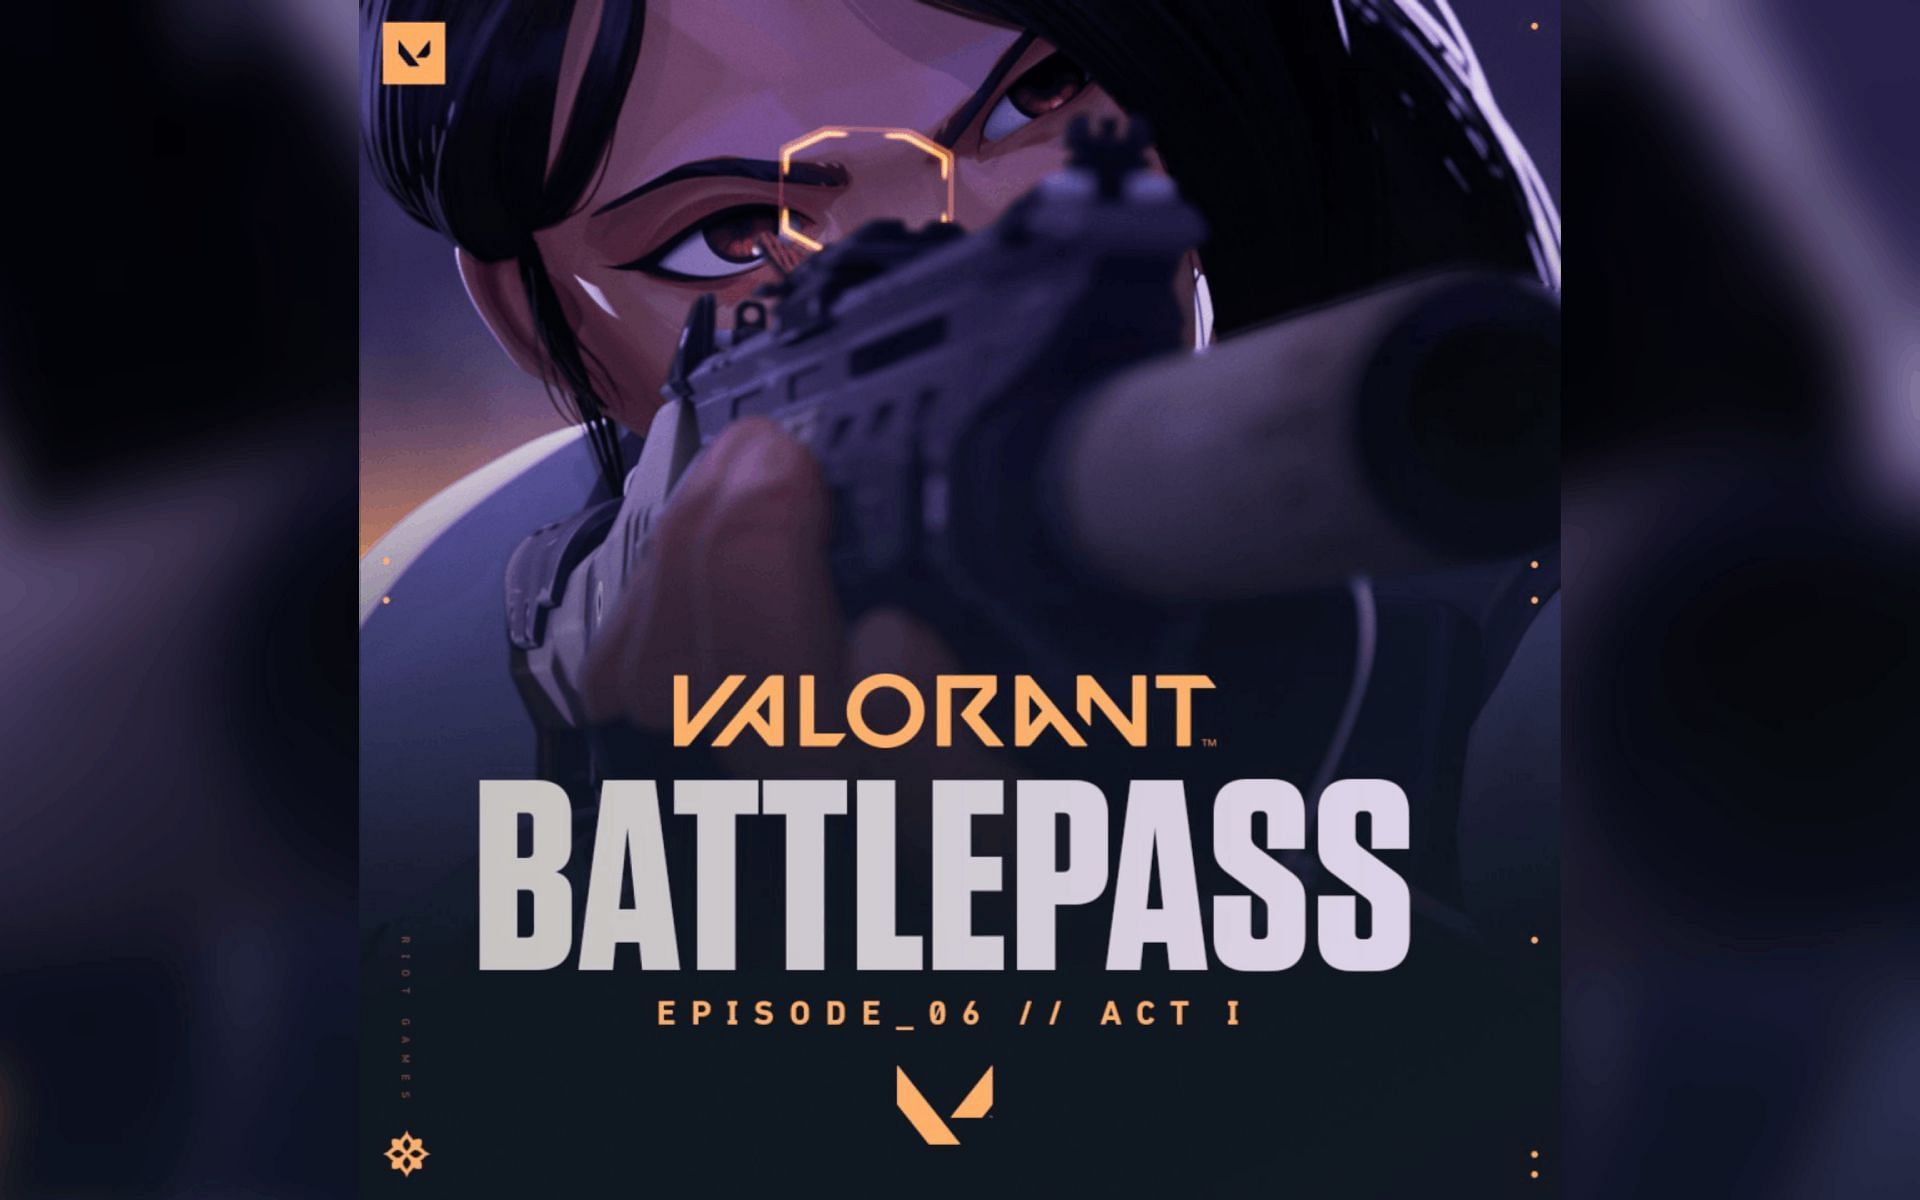 Valorant Episode 6 Act 1 Battlepass (Image via Riot Games)